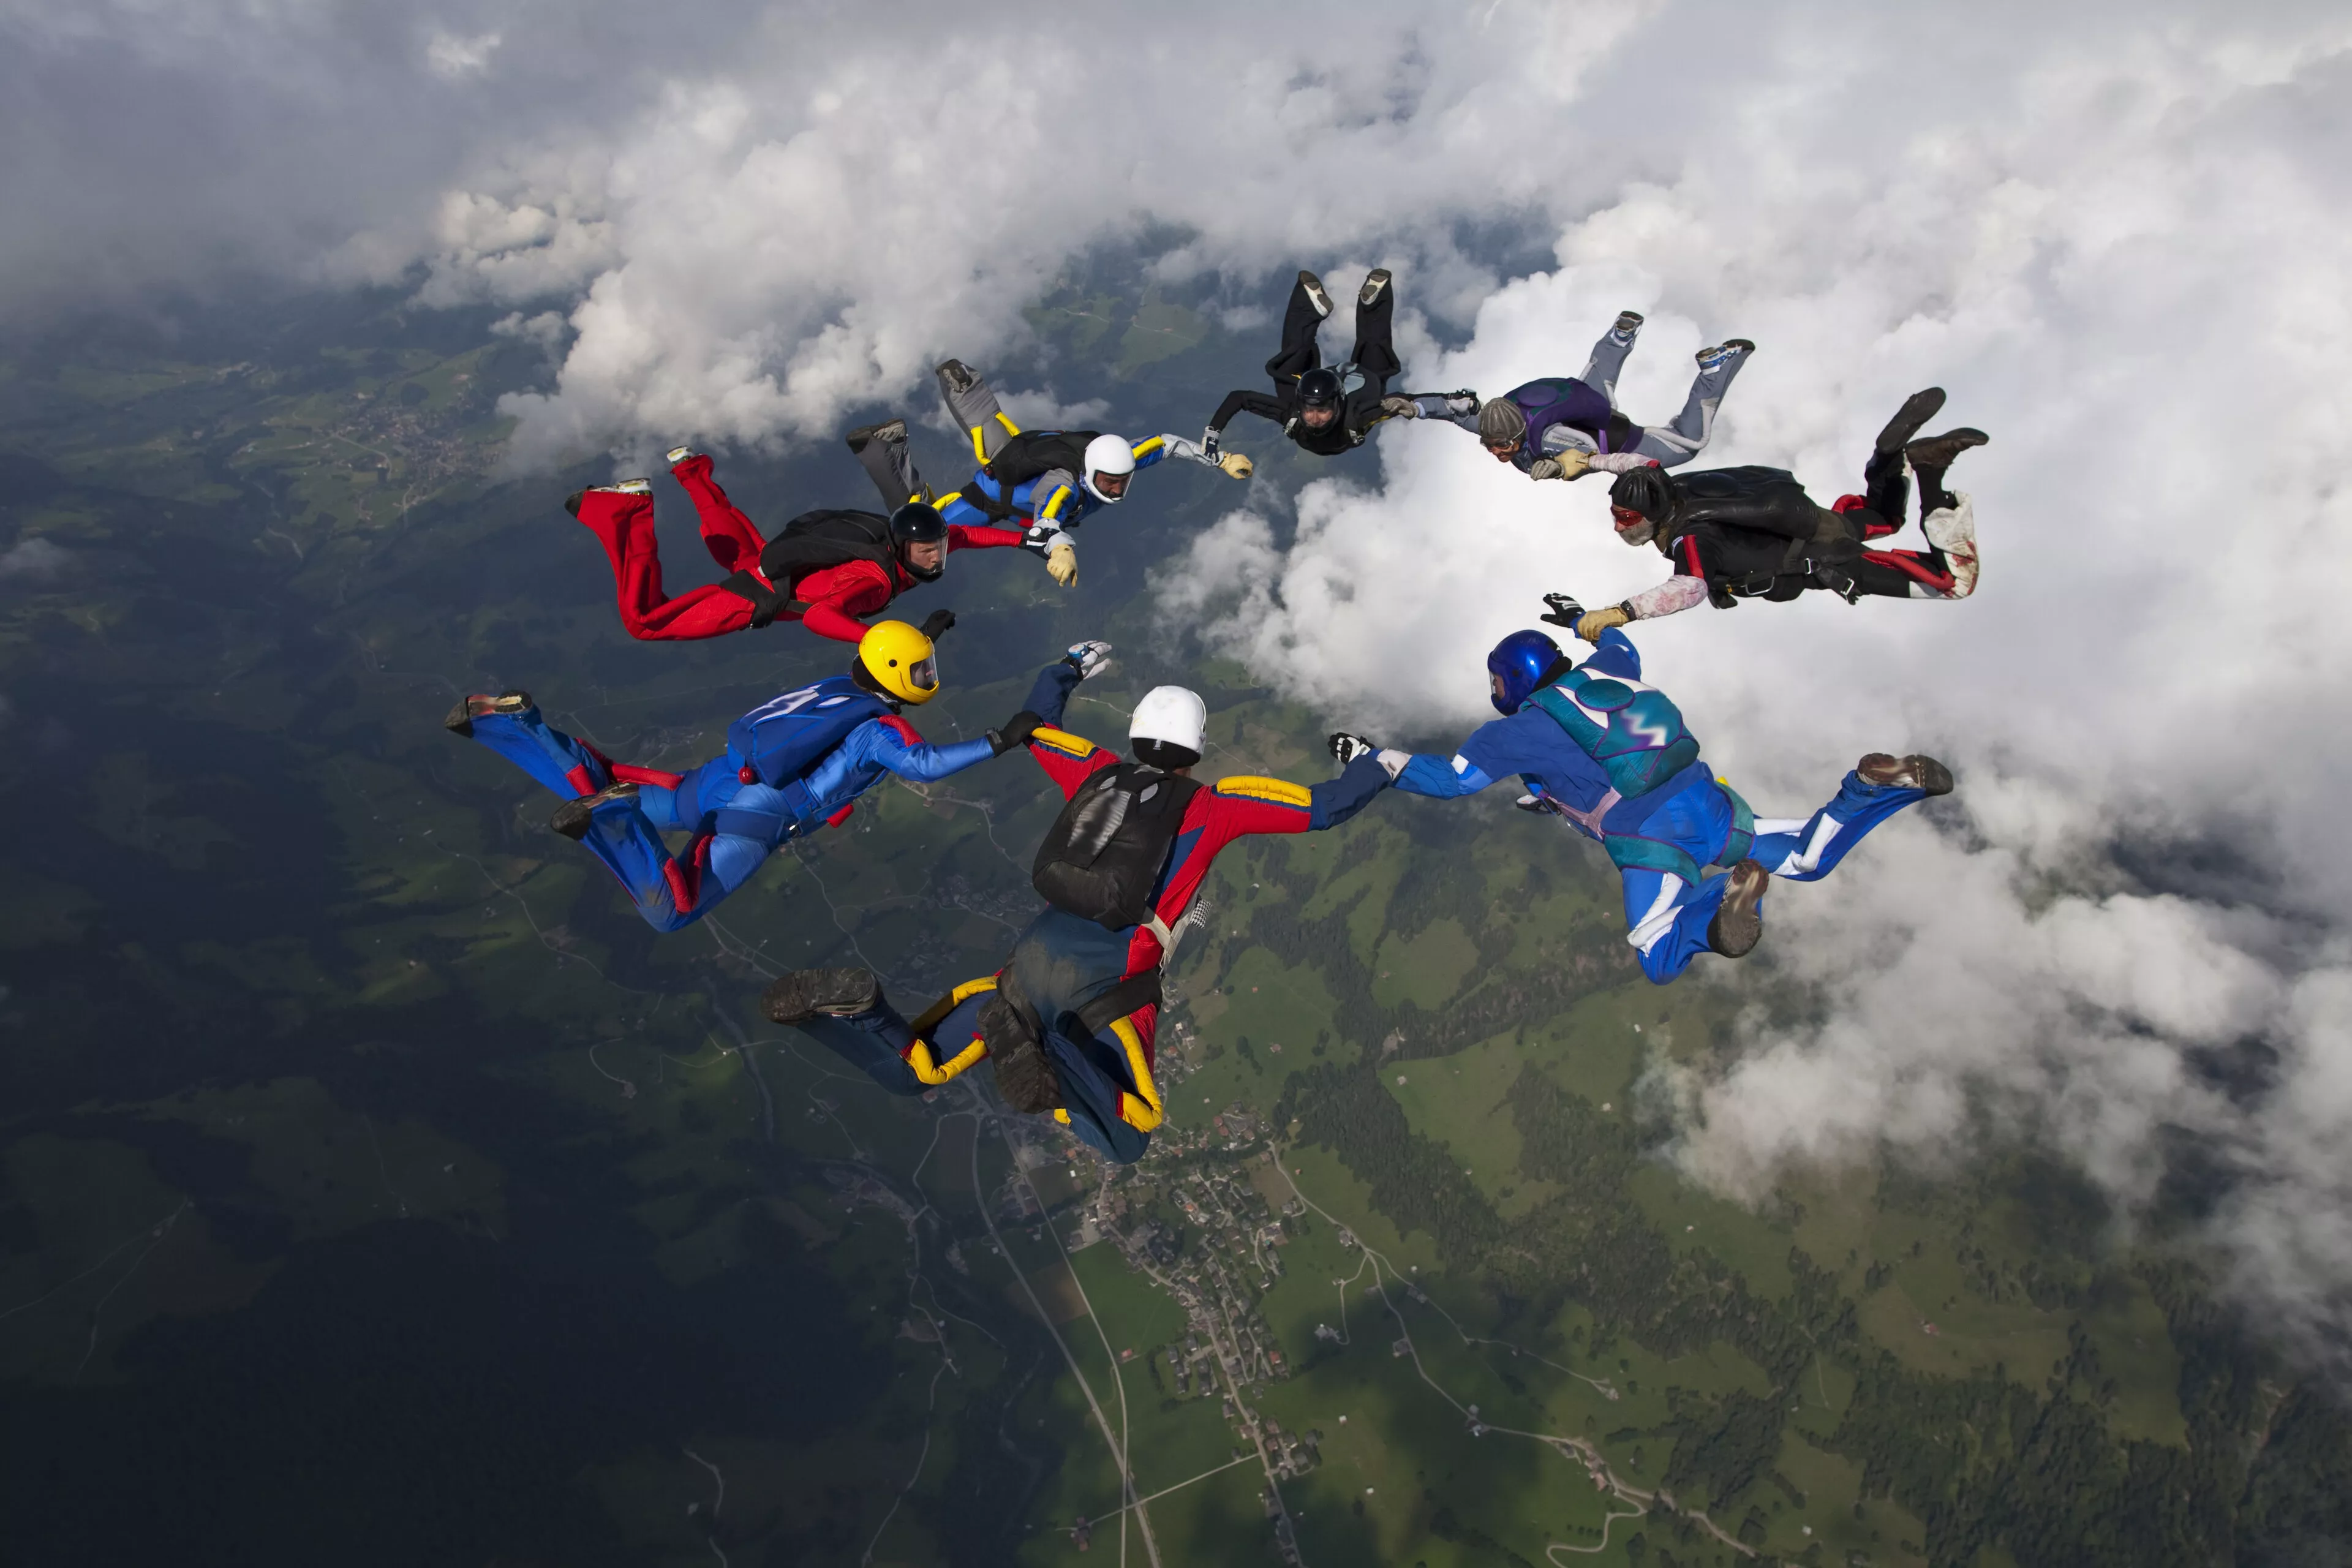 Skydive Saulgau in Germany, Europe | Skydiving - Rated 4.3